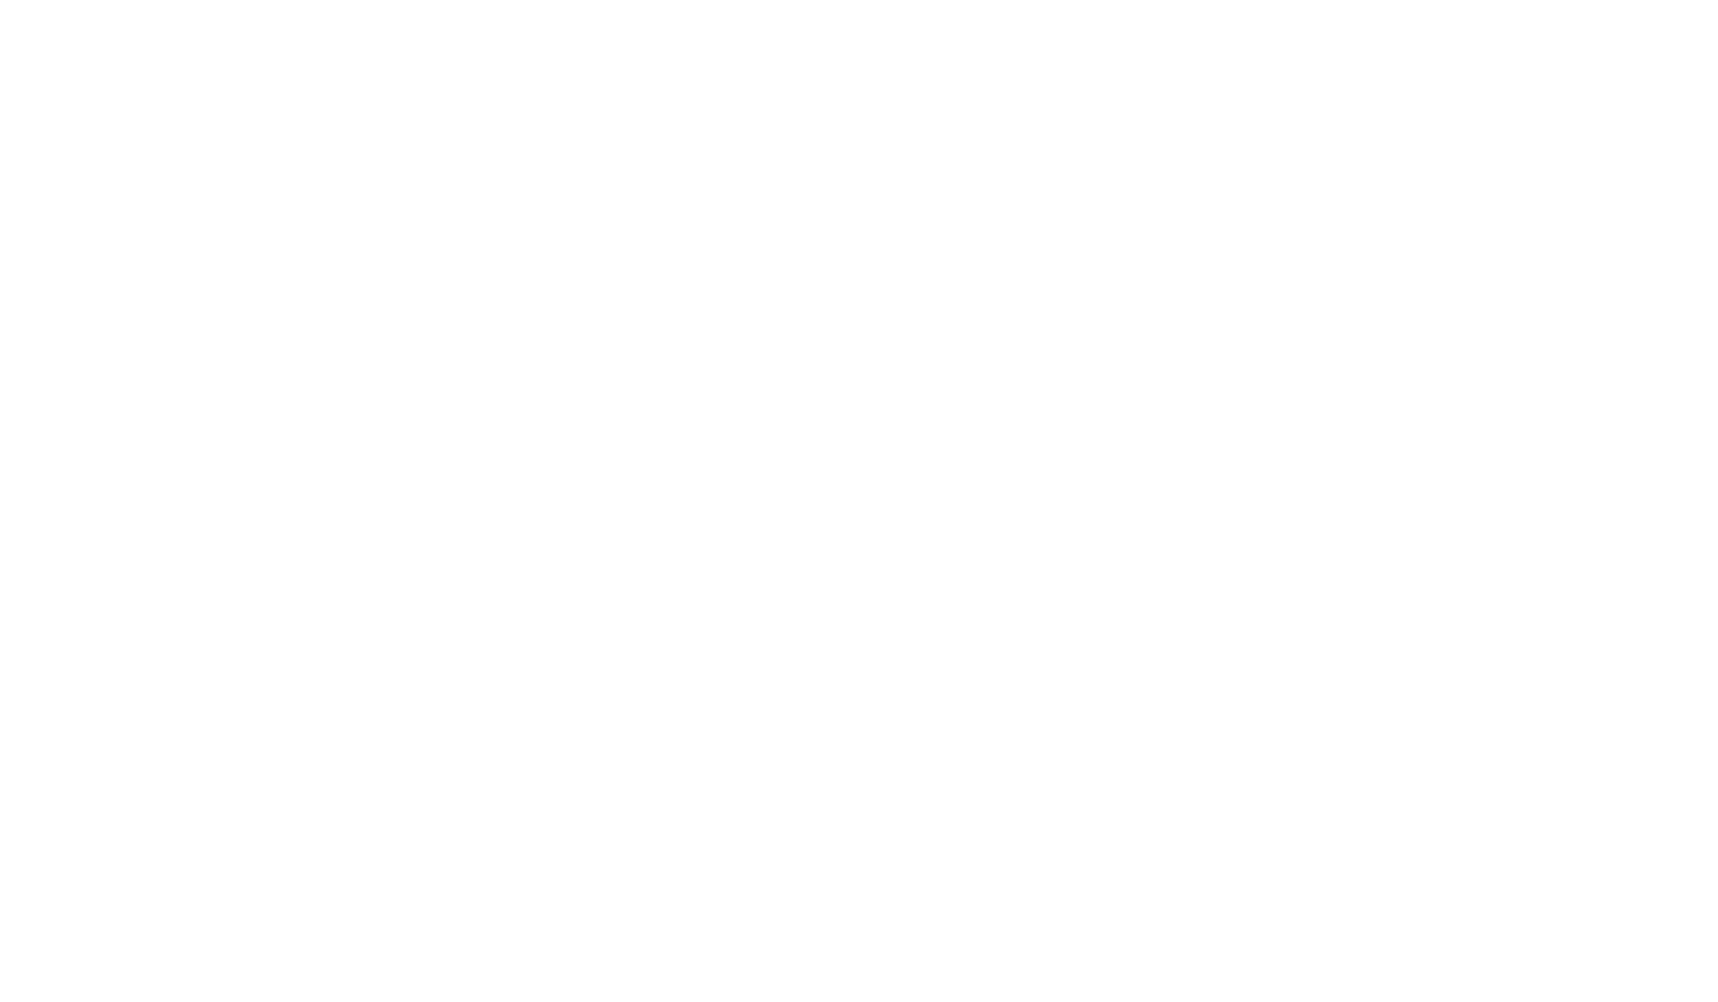 Danville State Savings Bank - New London,IA Homepage